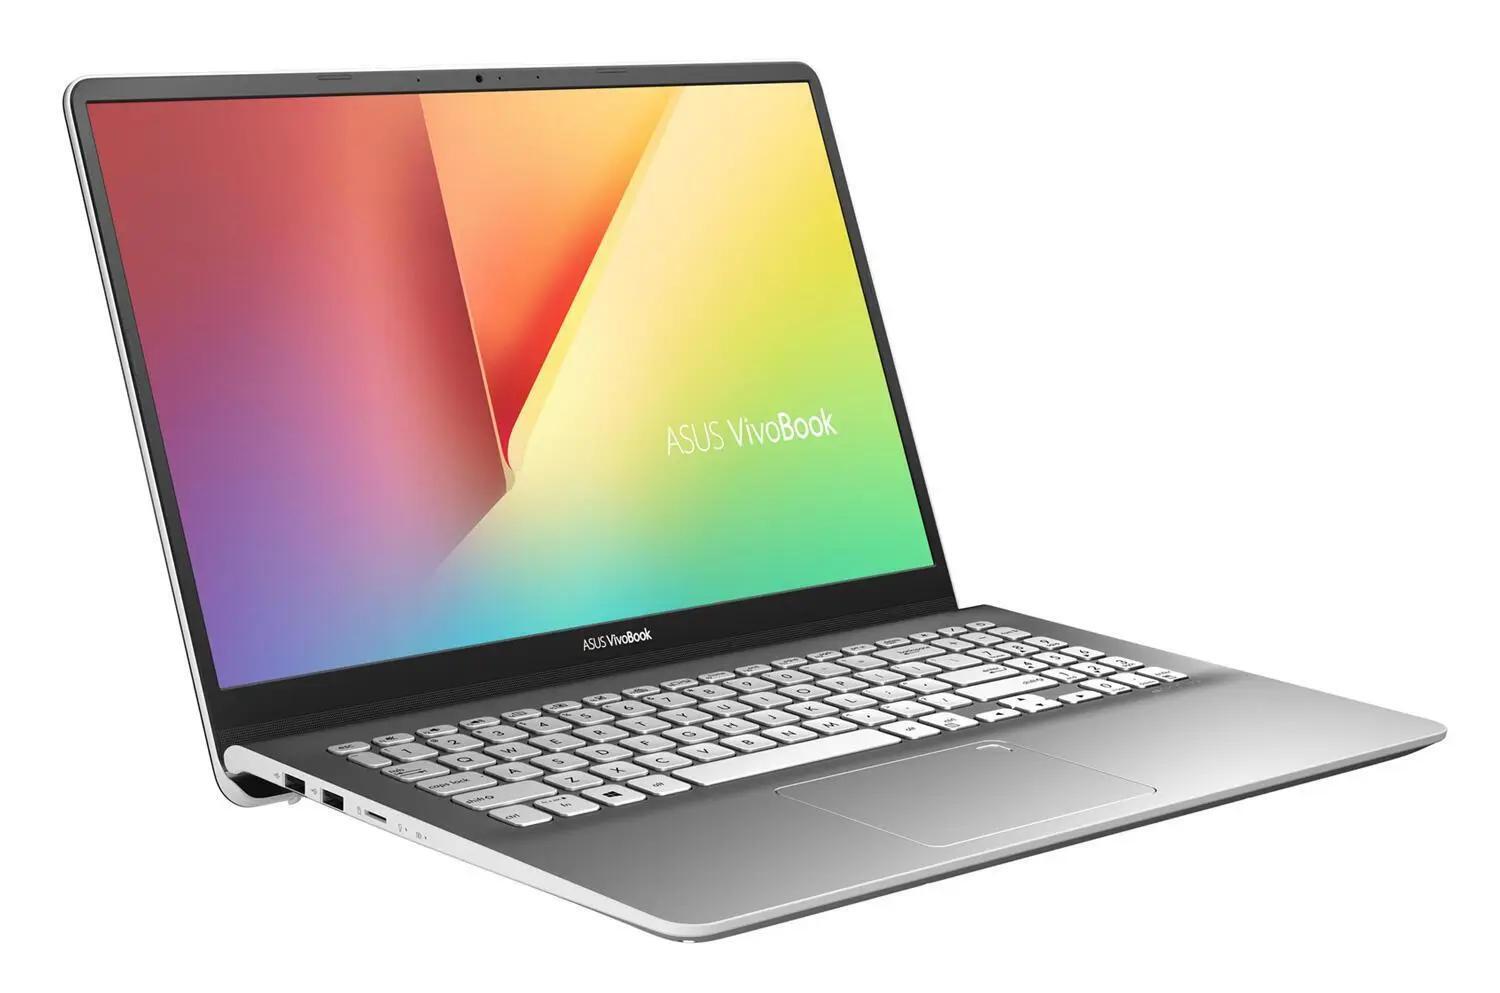 Laptop Asus Vivobook S15 S530UA-BQ072T - Intel Core i3-8130U, 4GB RAM, HDD 1TB, Intel UHD Graphics 620, 15.6 inch